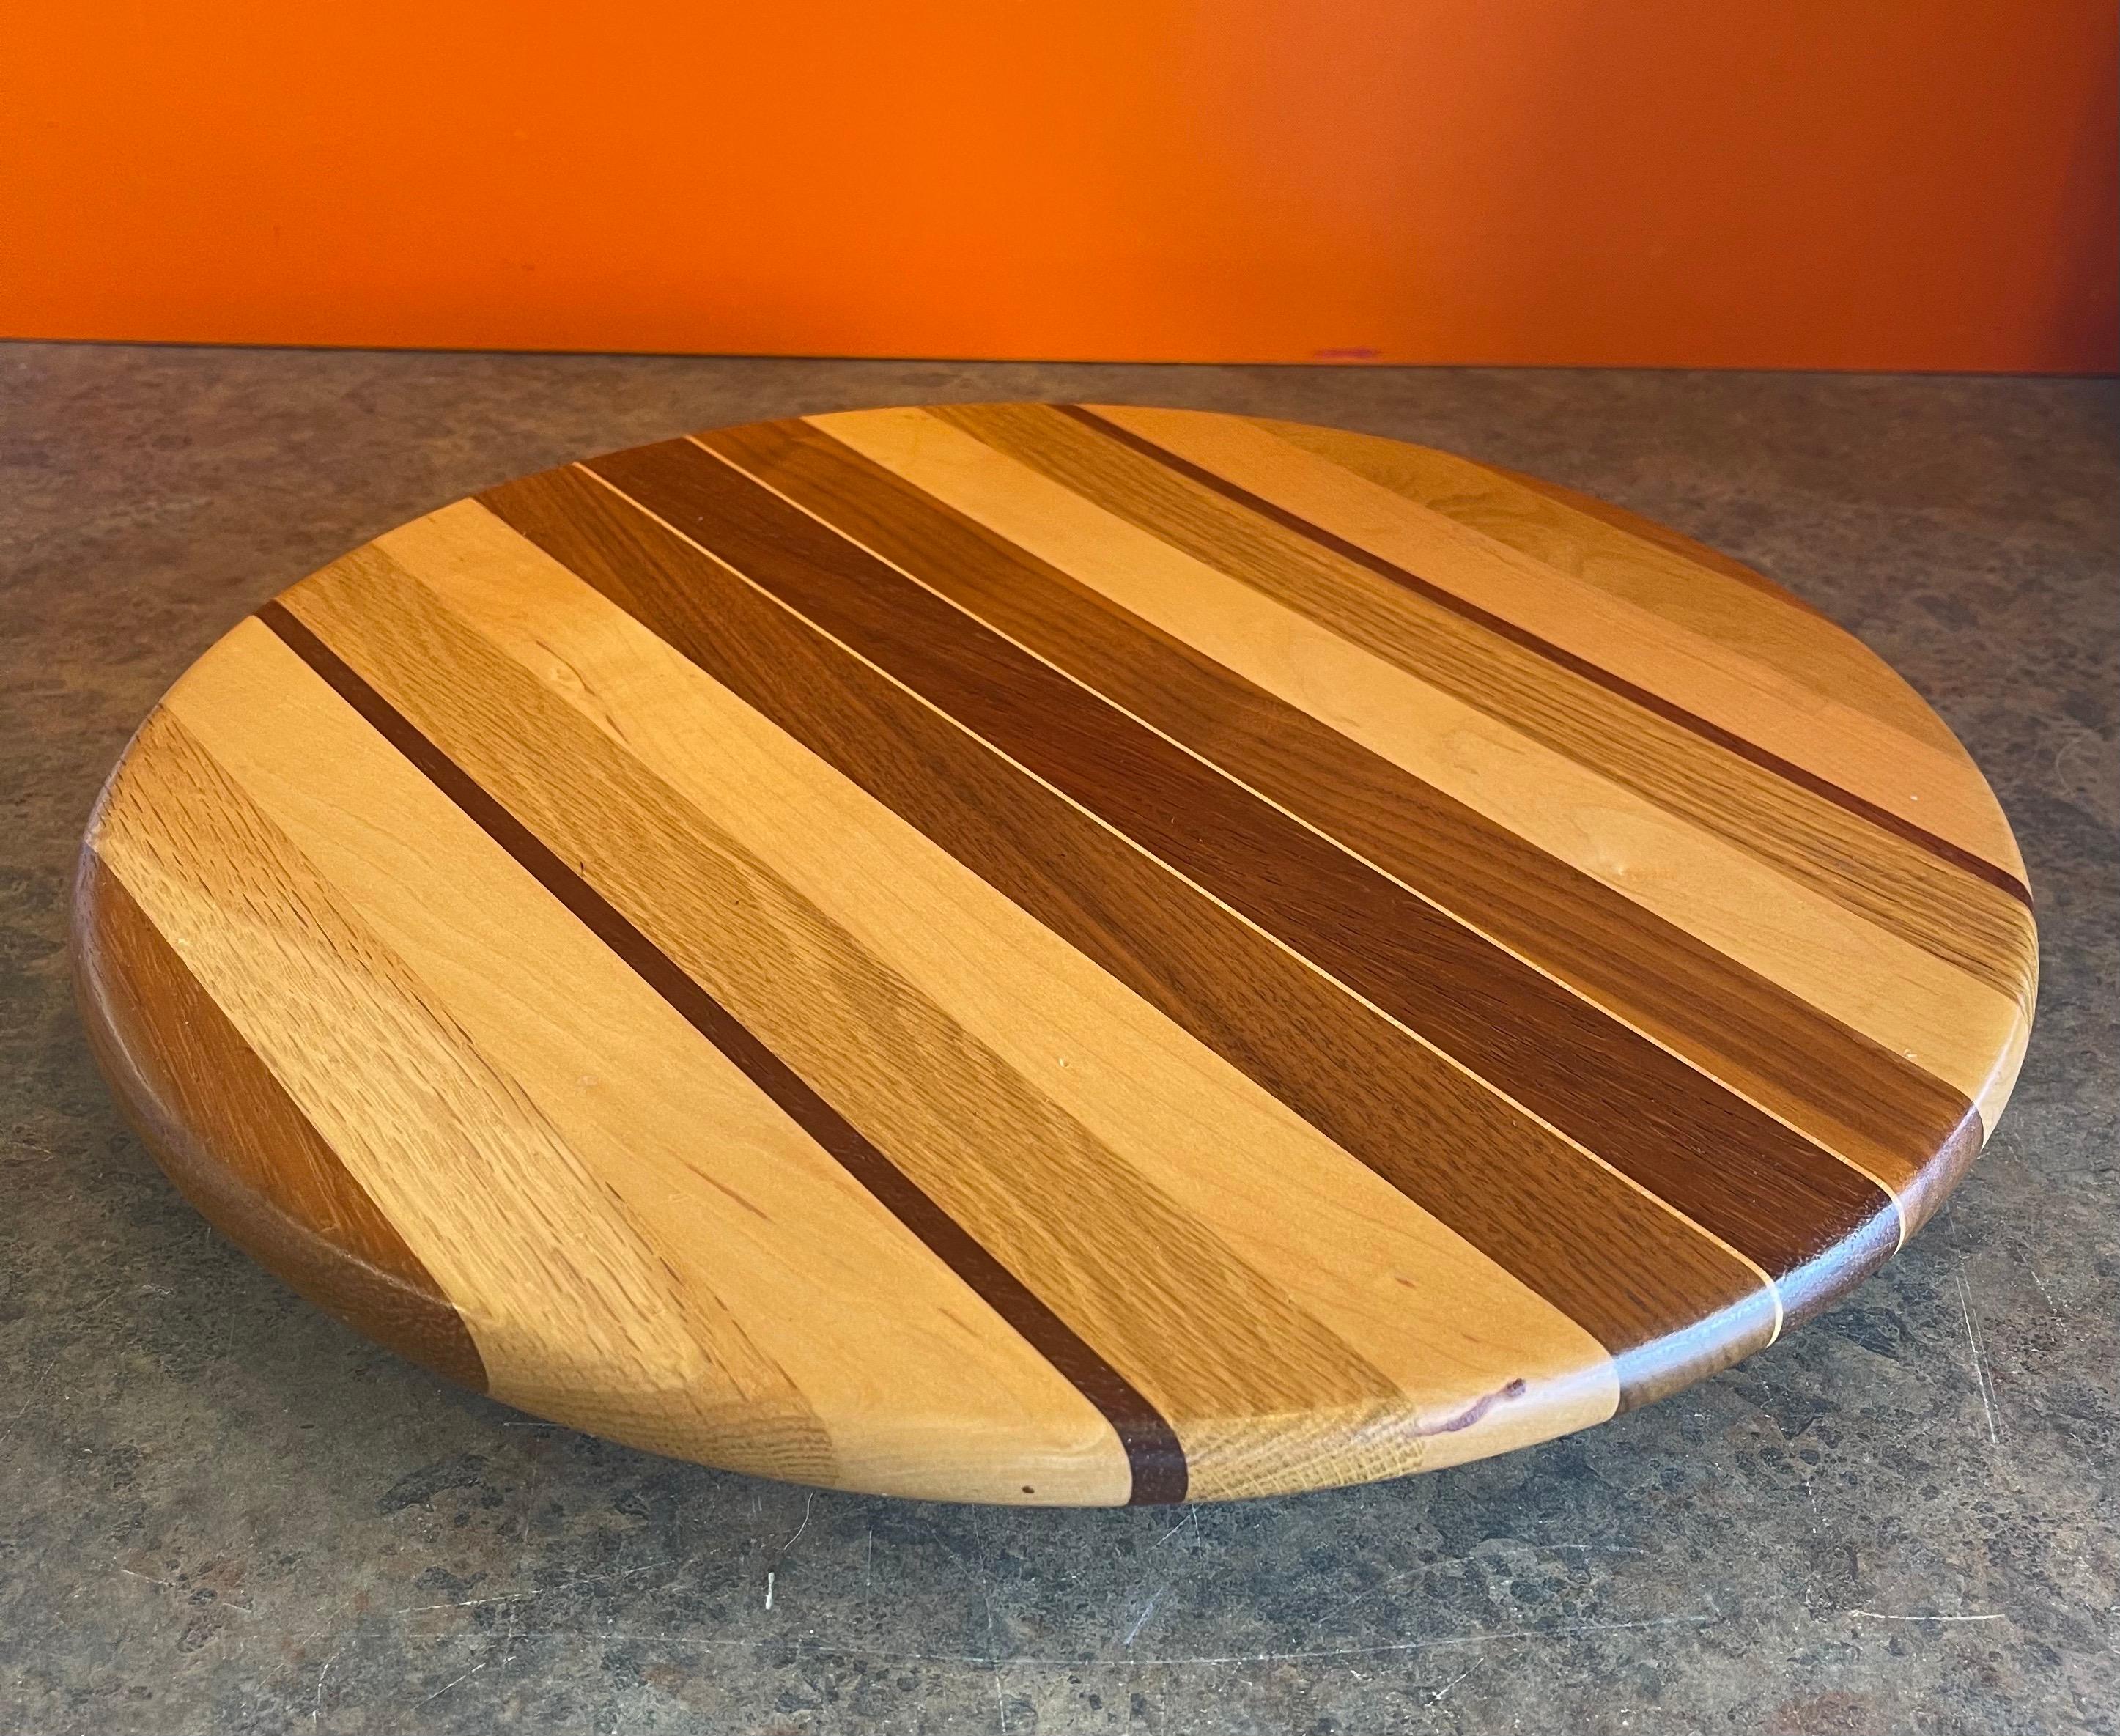 wooden lazy susan serving board